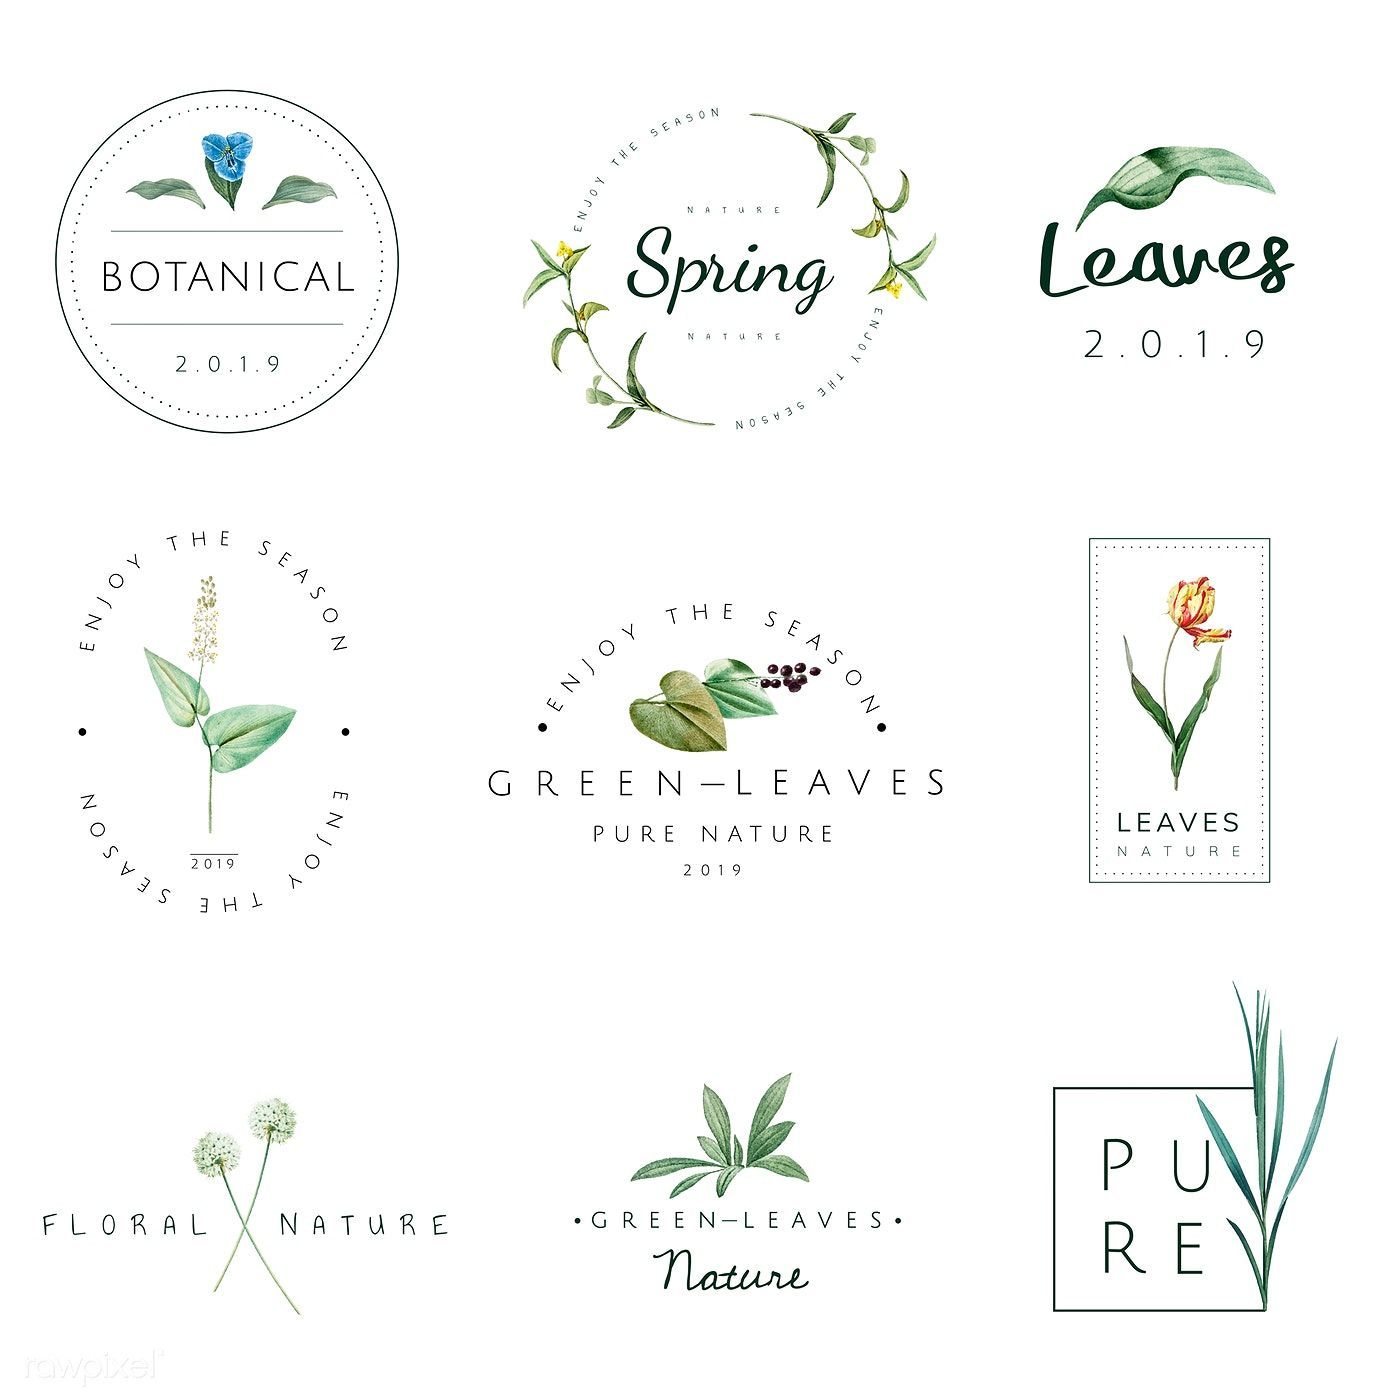 8 planting Logo inspiration
 ideas